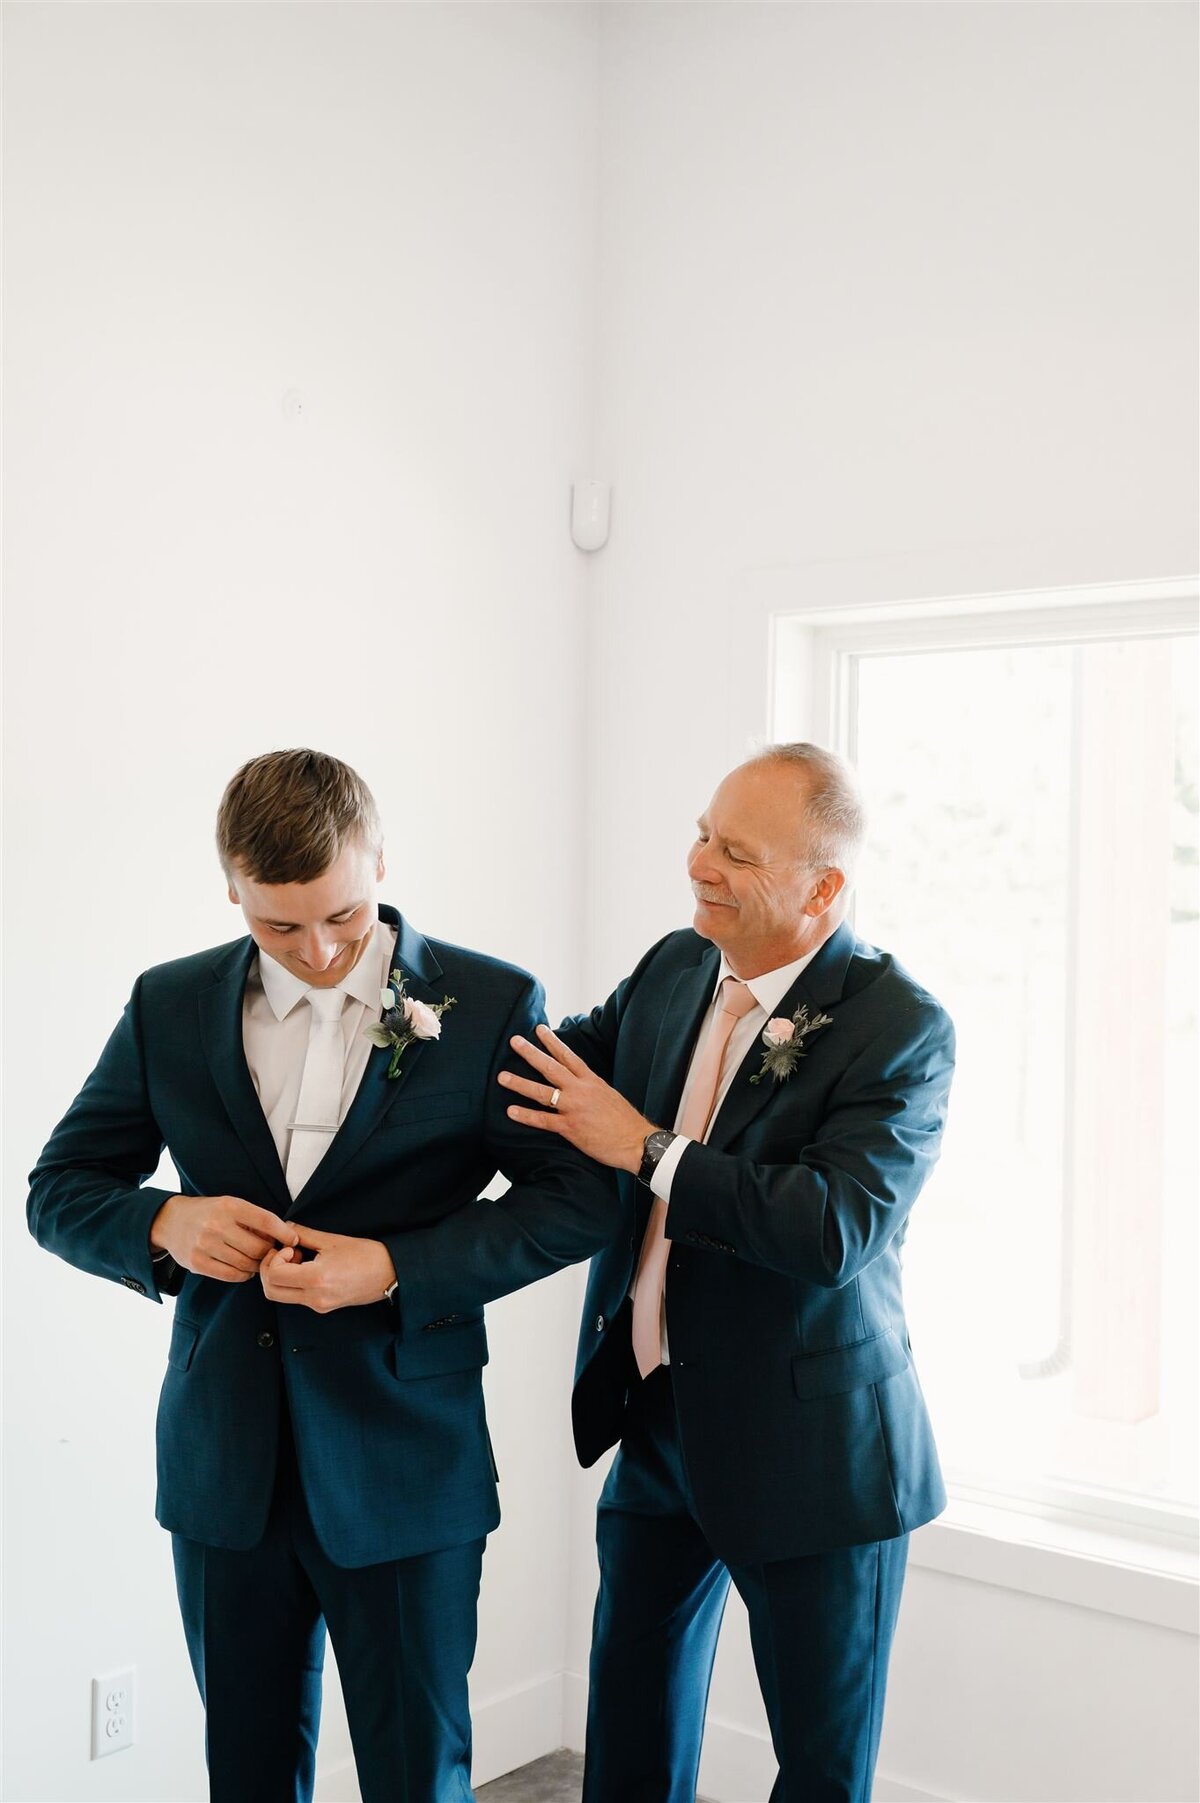 Dad helps groom put on suit jacket at wedding in Bemidji, MN